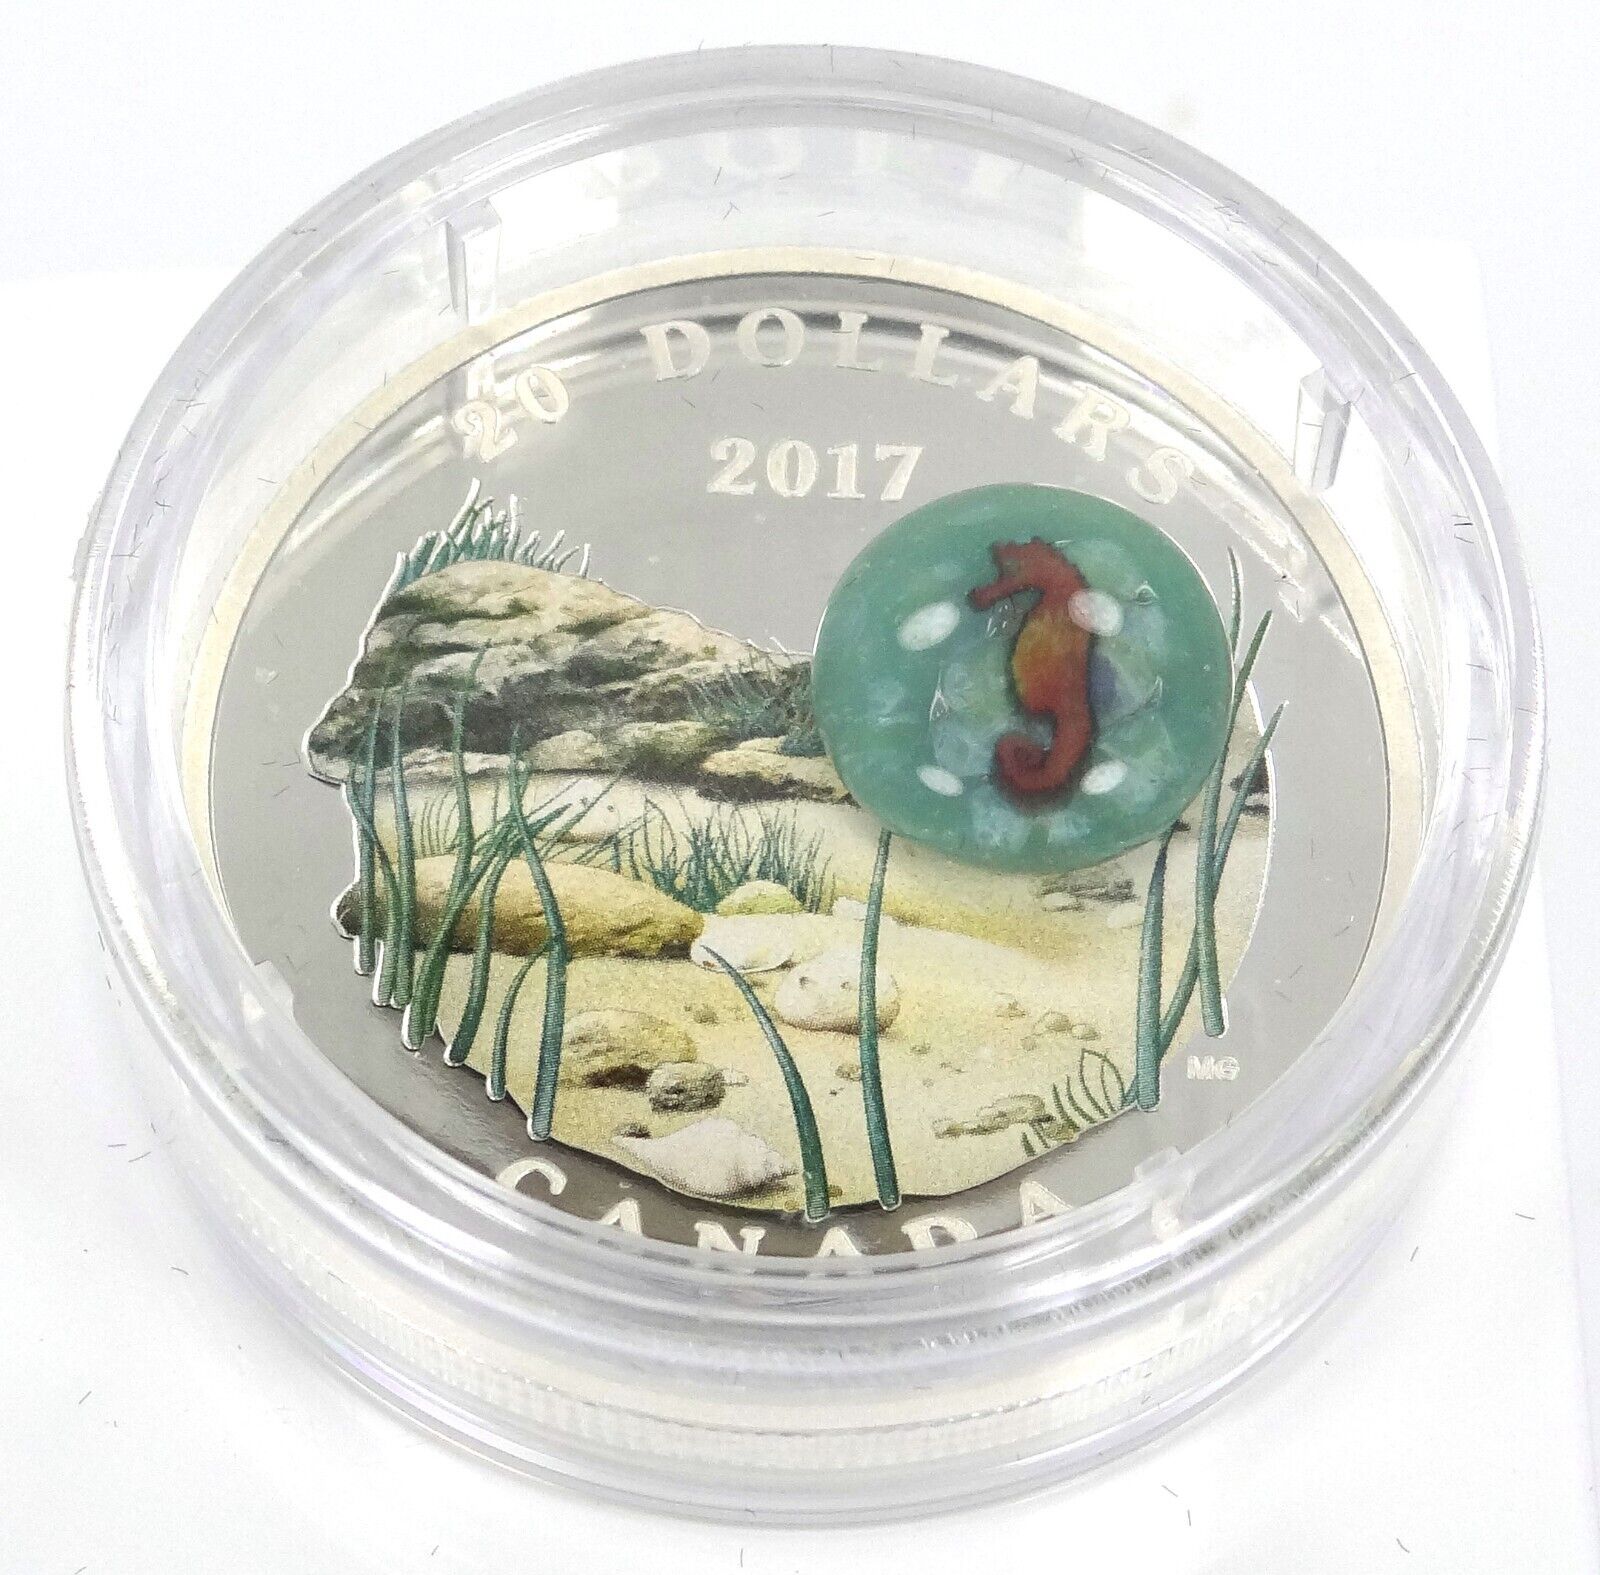 31.39g Silver Coin 2017 Canada $20 Murrini Glass Proof Under the Sea - Seahorse-classypw.com-2